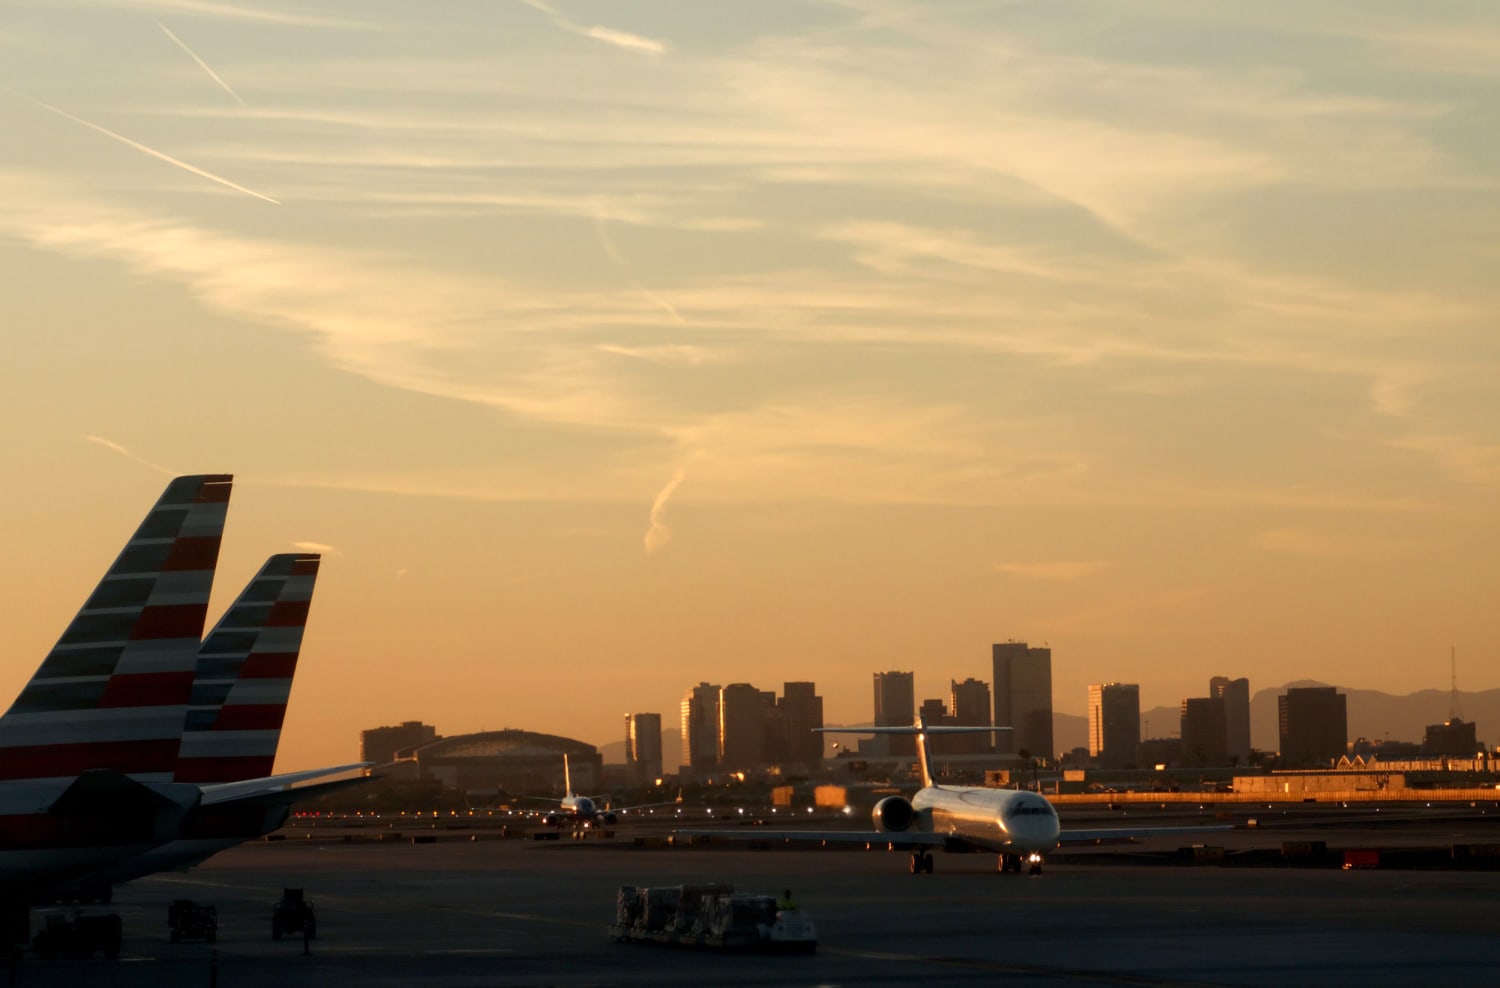 3 TSA agents injured after ‘unprovoked’ attack at Phoenix airport, agency says